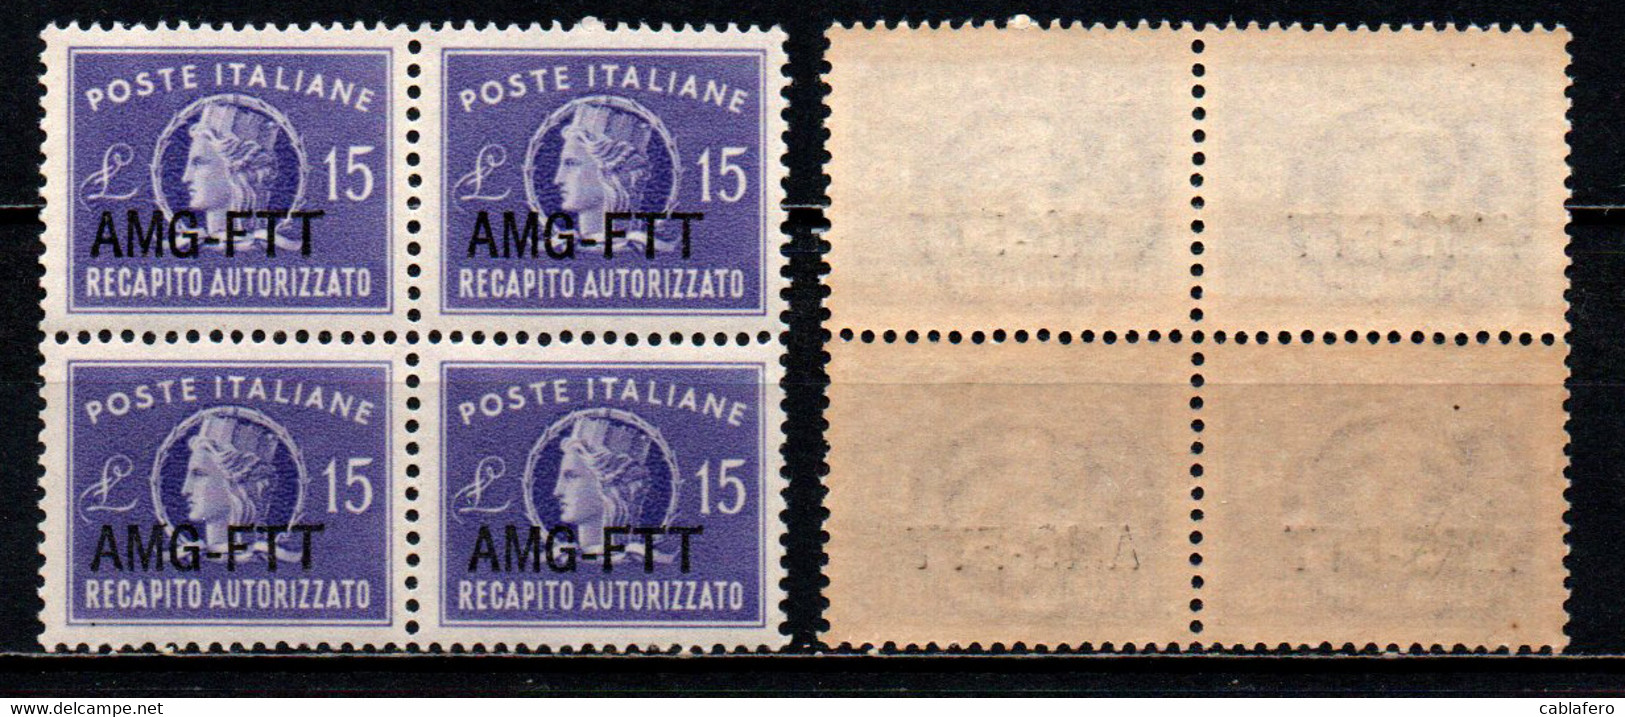 TRIESTE - AMGFTT - 1949 - 15 LIRE SOVRASTAMPA SU UNA RIGA - QUARTINA - MNH - Revenue Stamps